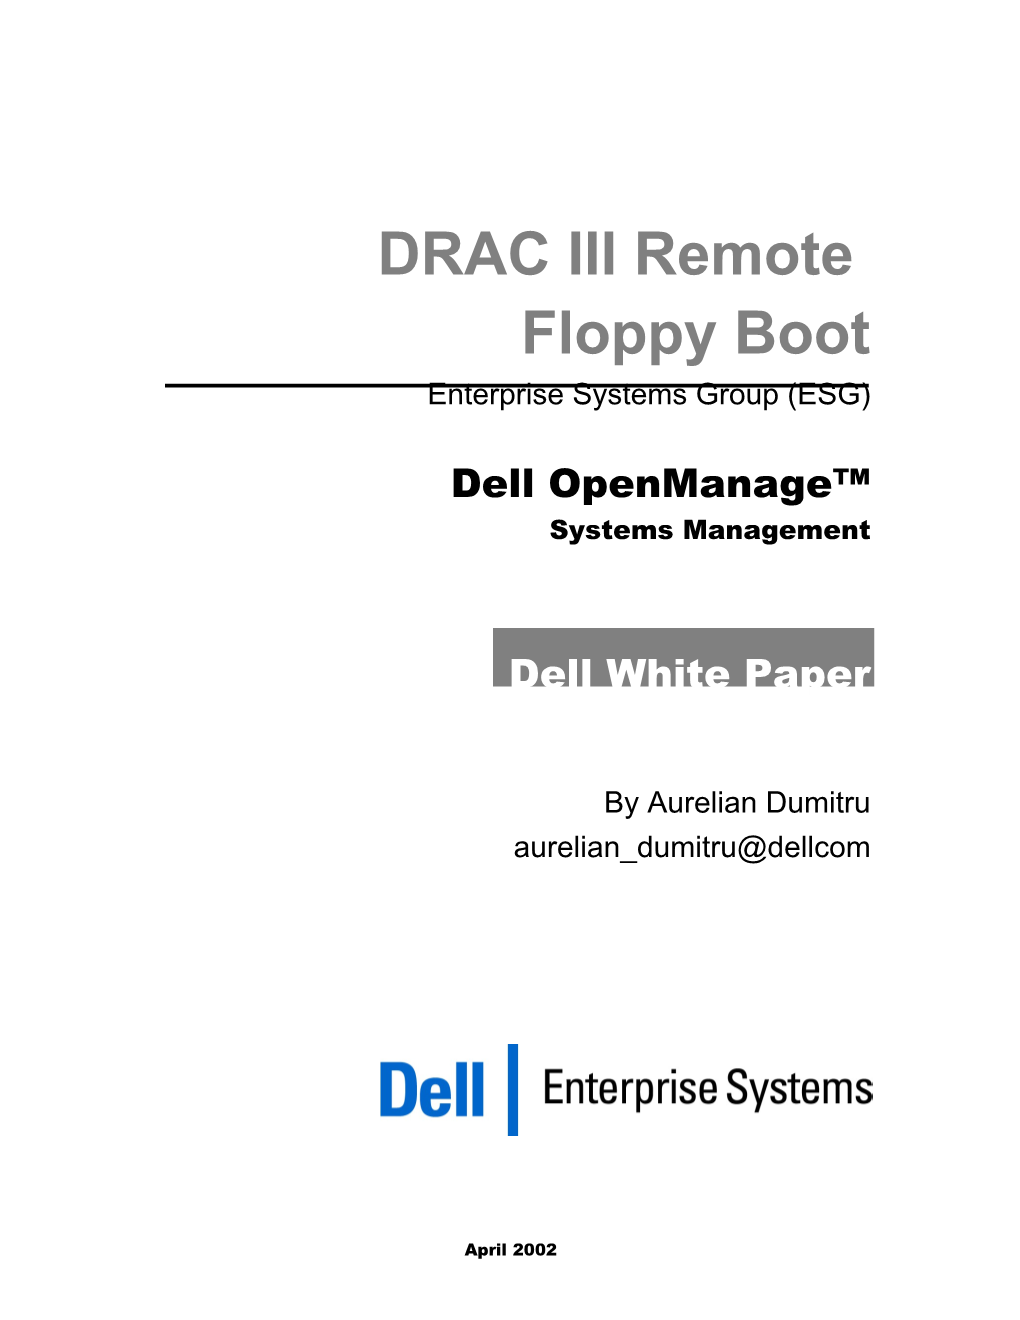 DRAC III Remote Floppy Boot